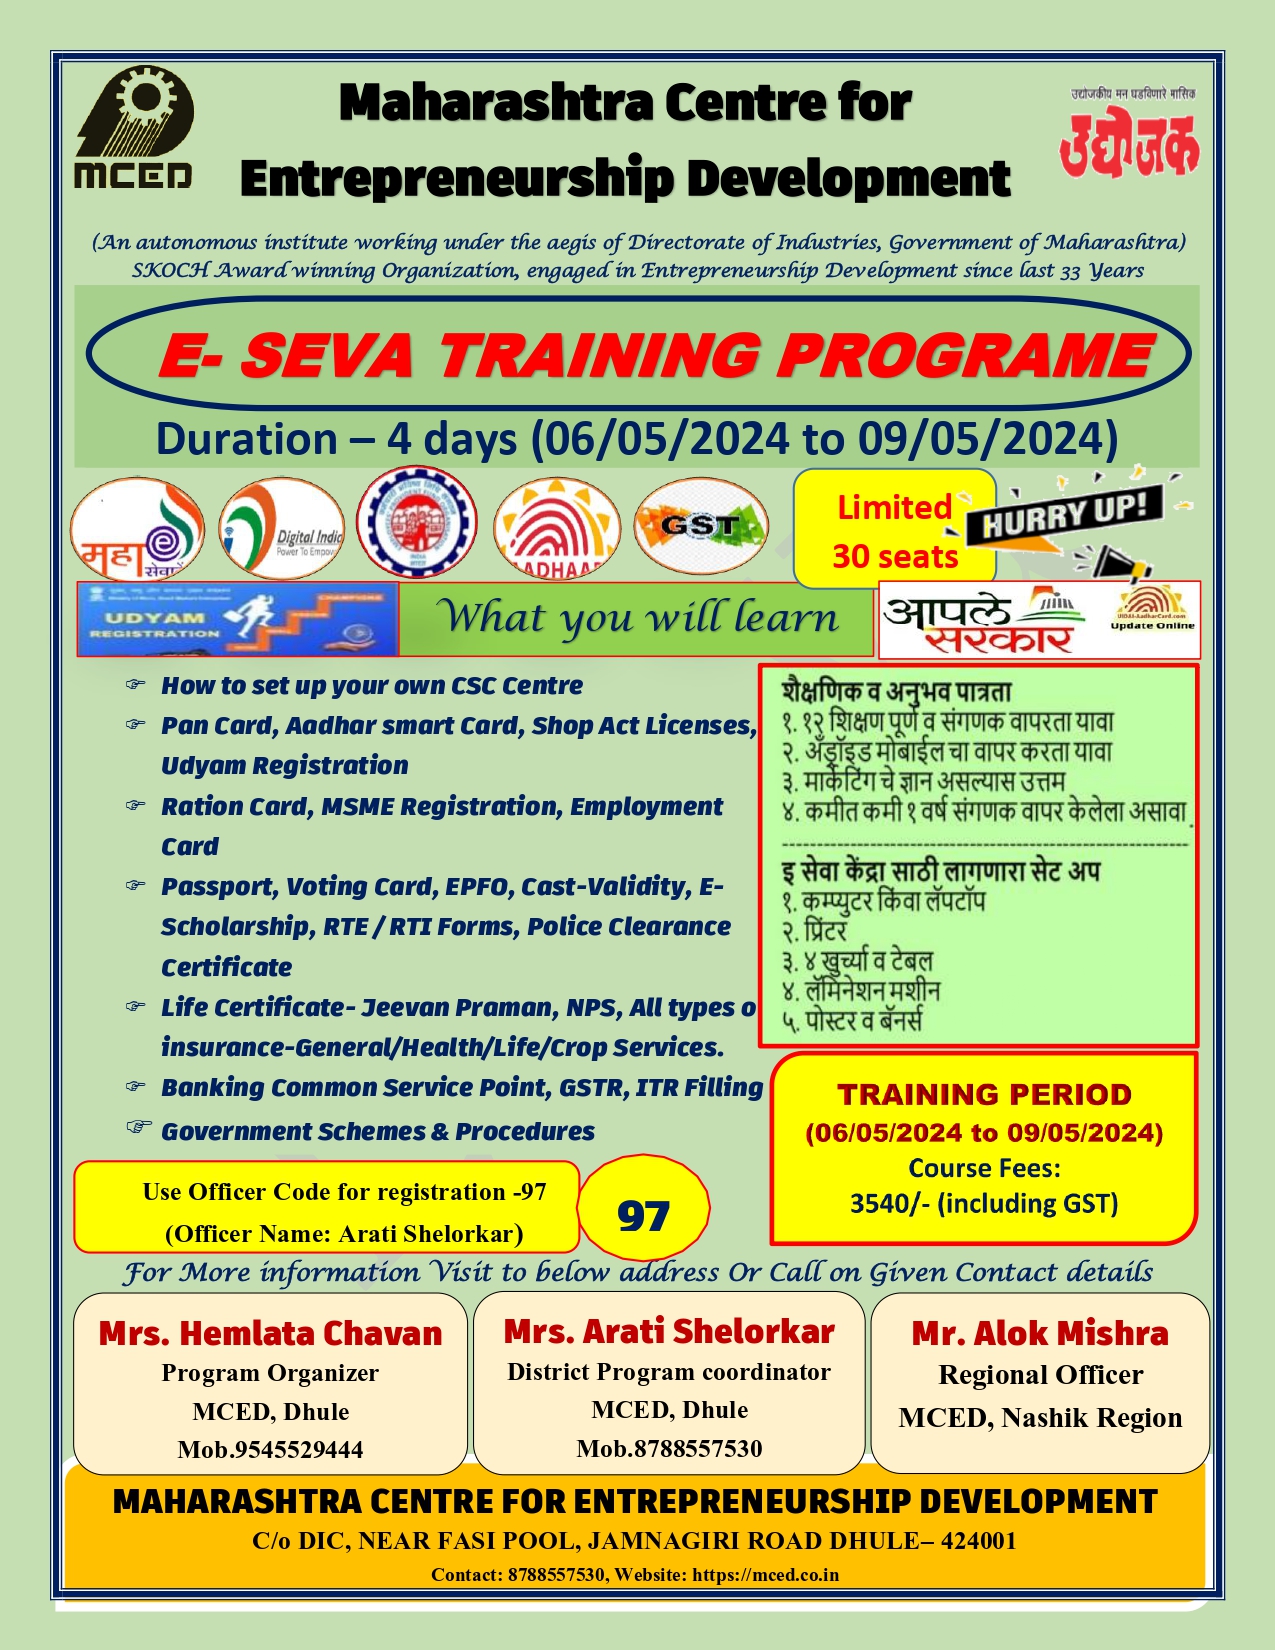 EDP On E- Seva Training Programme